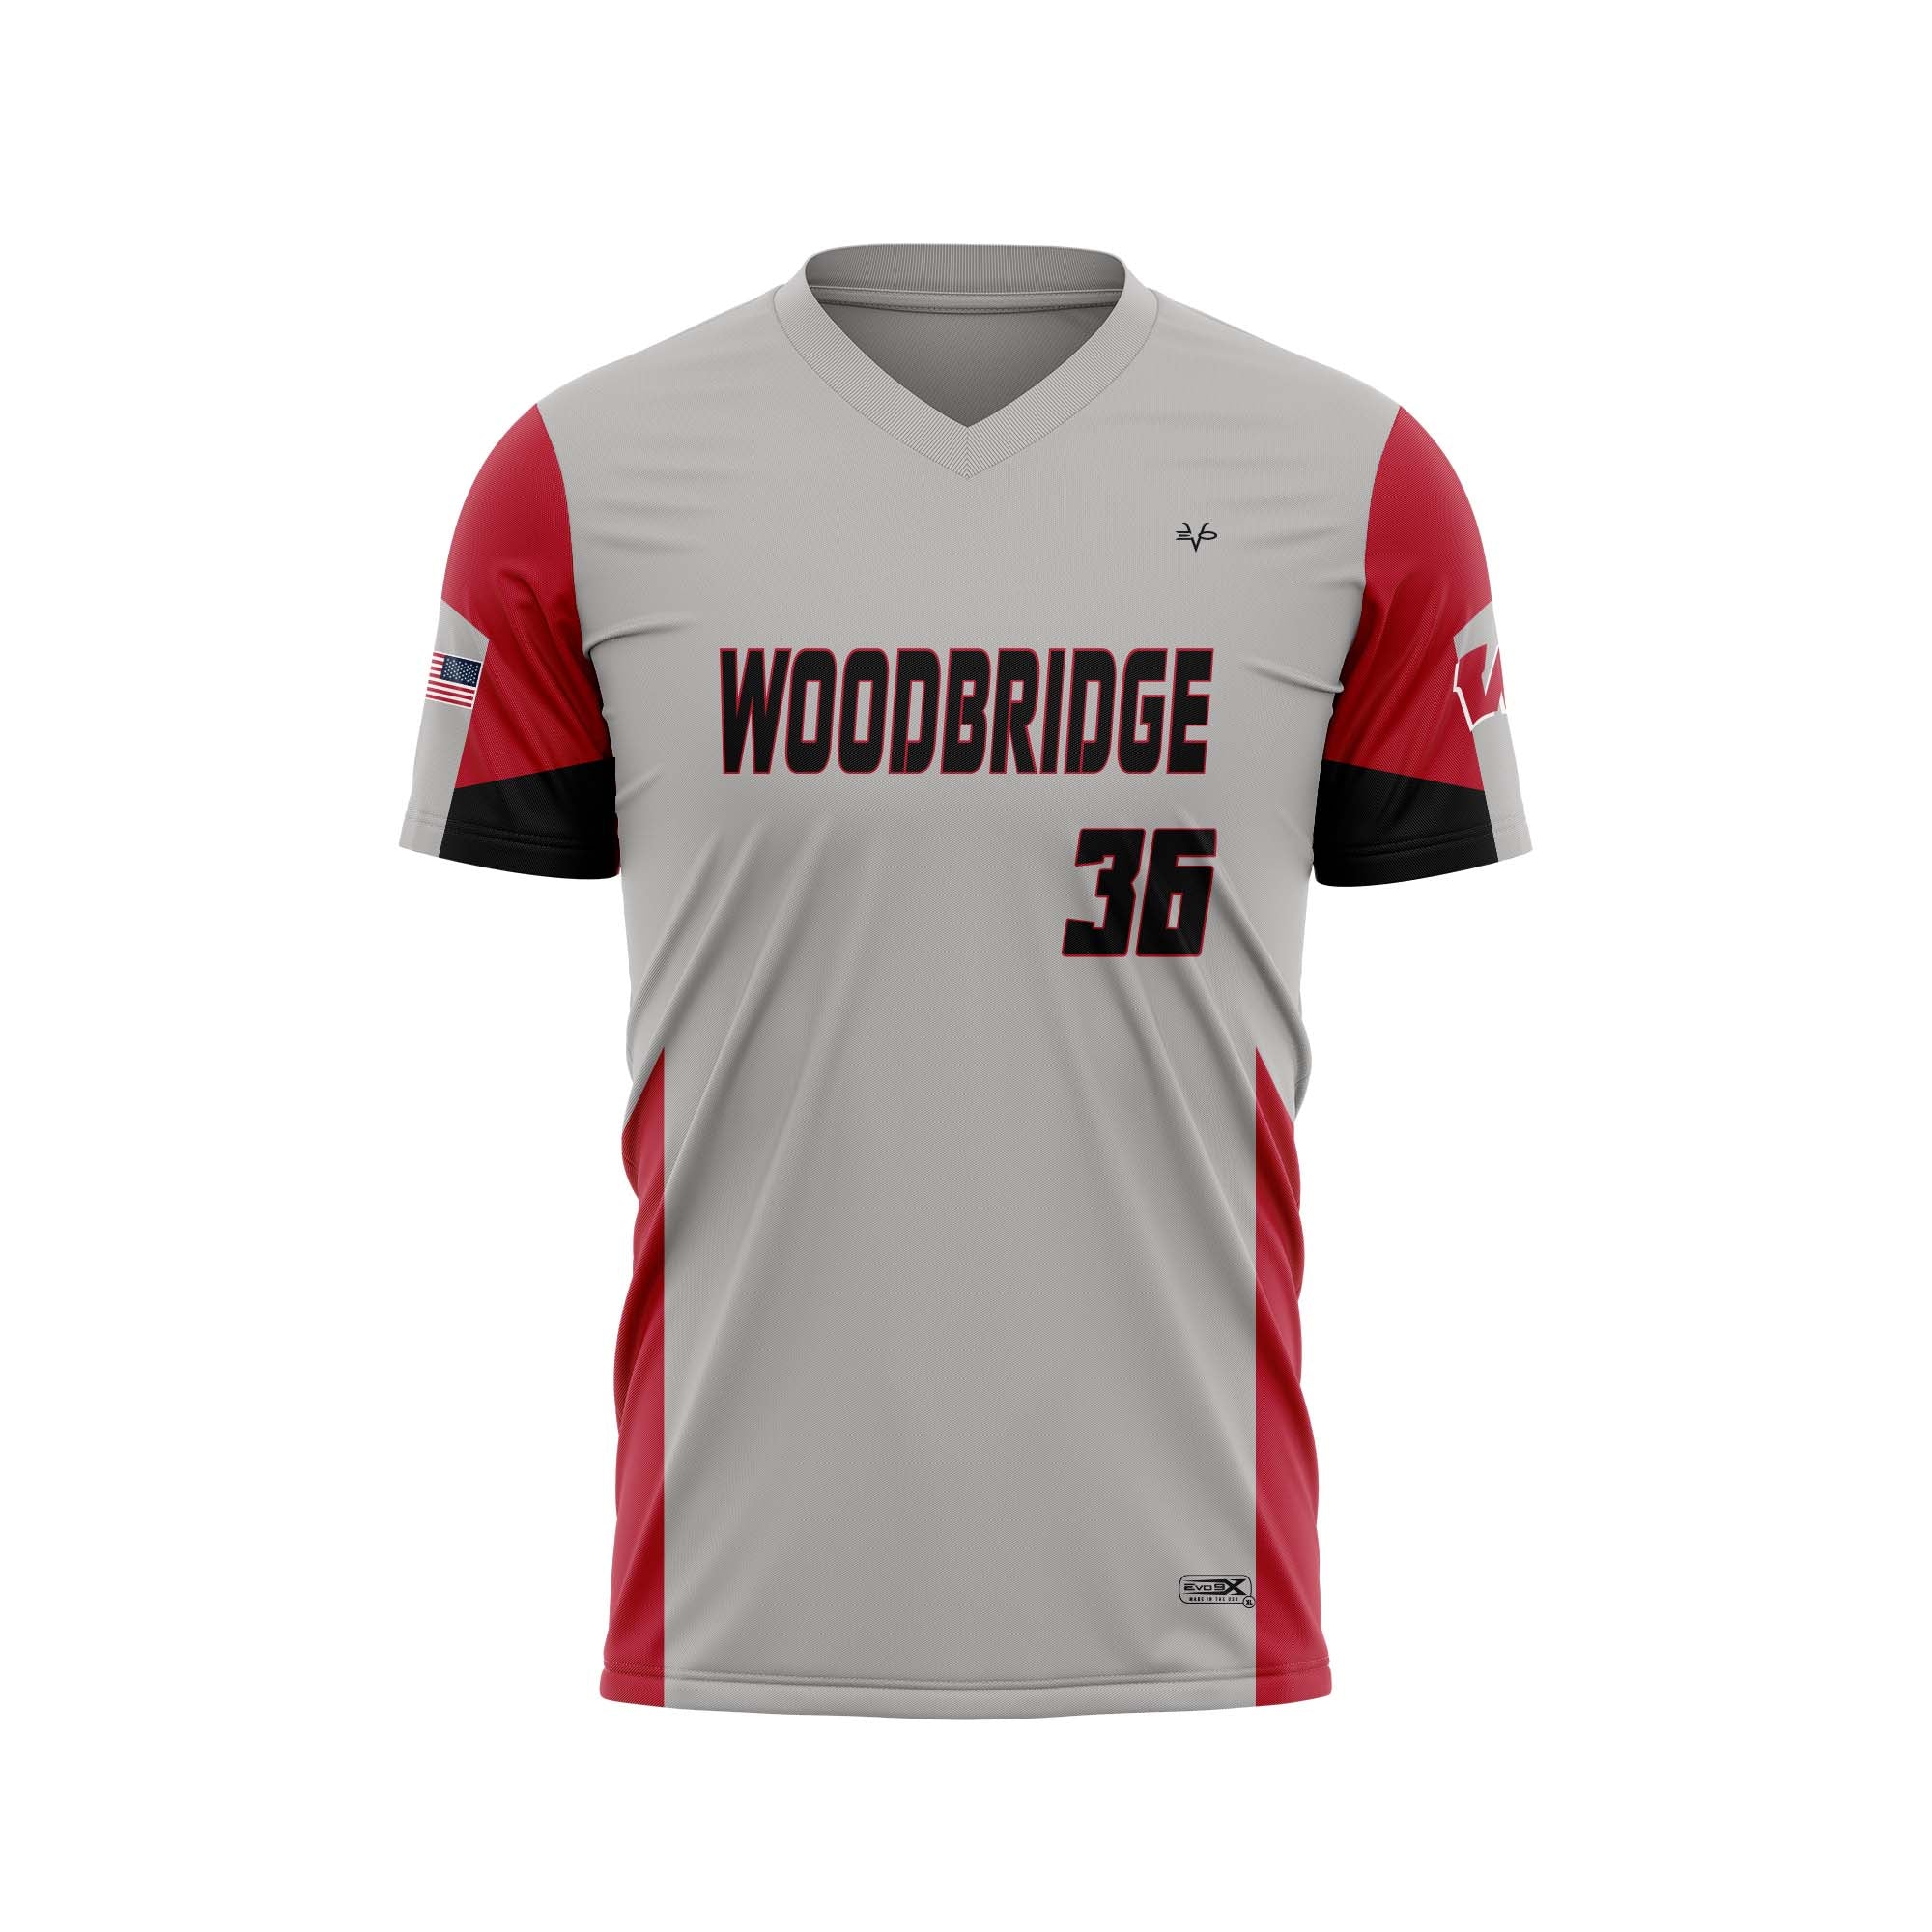 Woodbridge Barrons Player Jersey